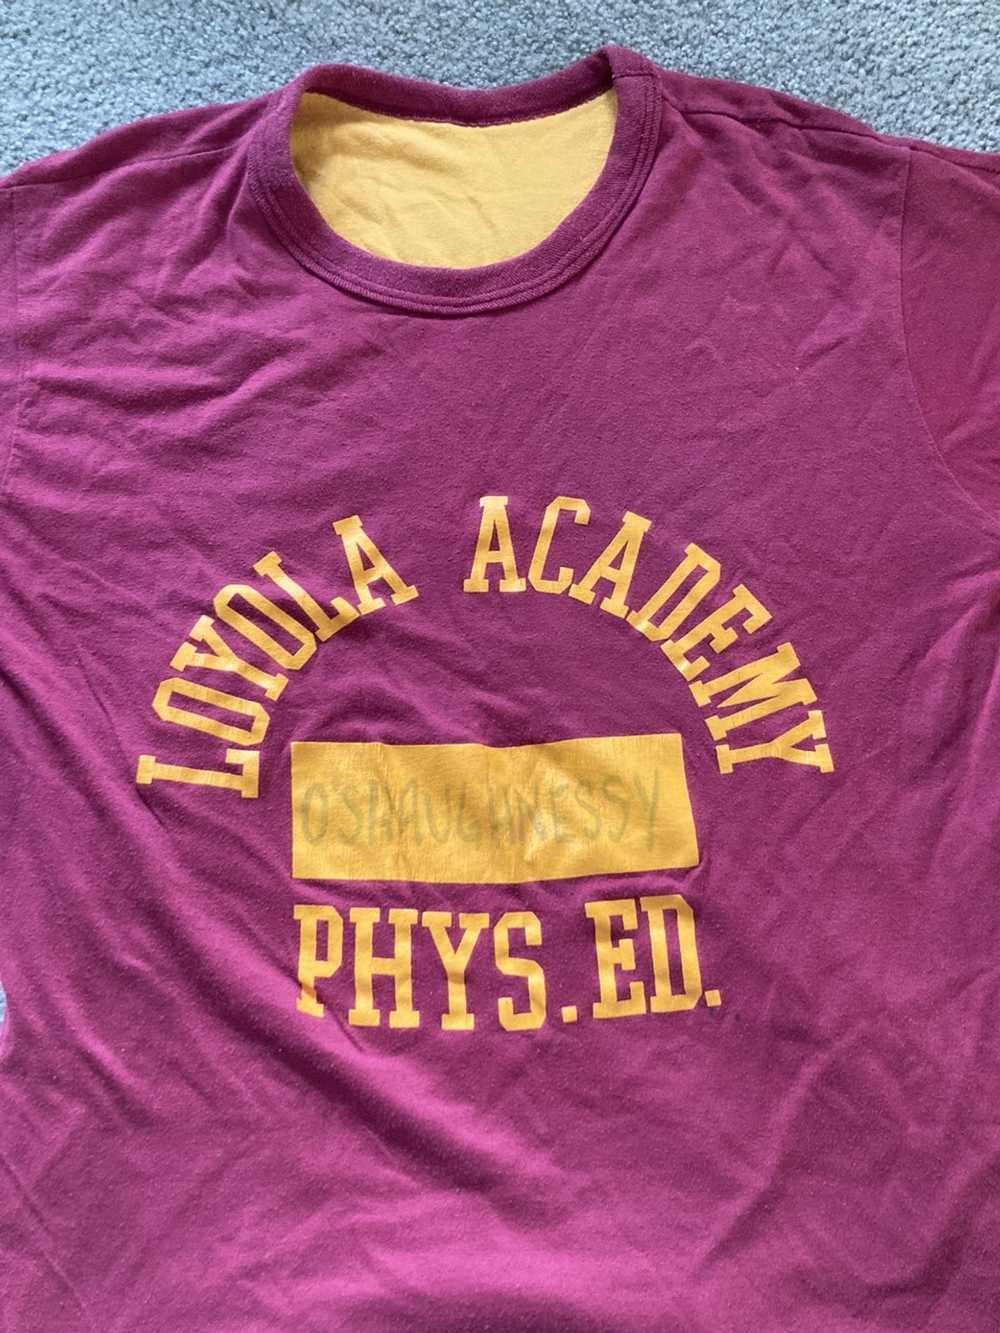 Vintage 1970s Reversible Loyola Physical Educatio… - image 2